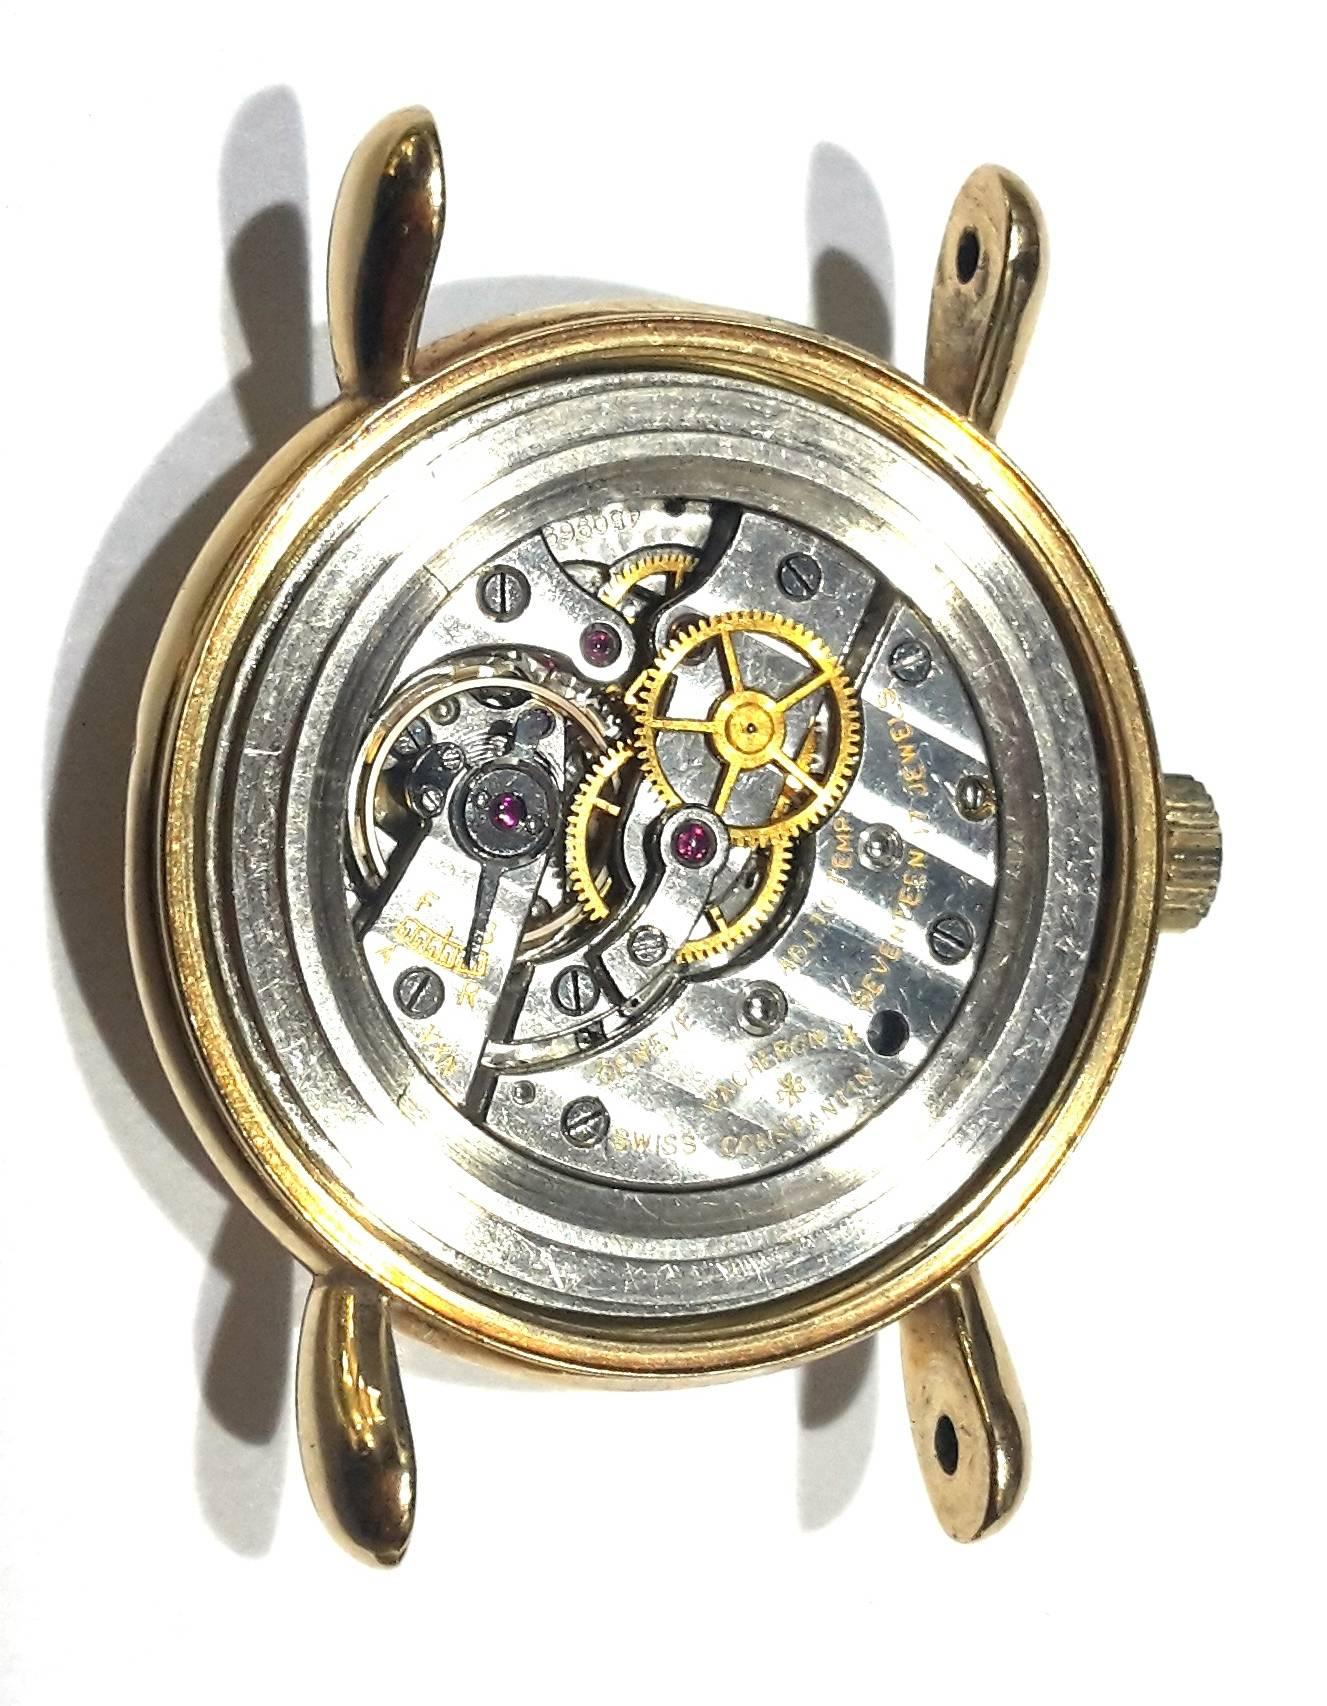 vacheron & constantin 1940's wrist watch